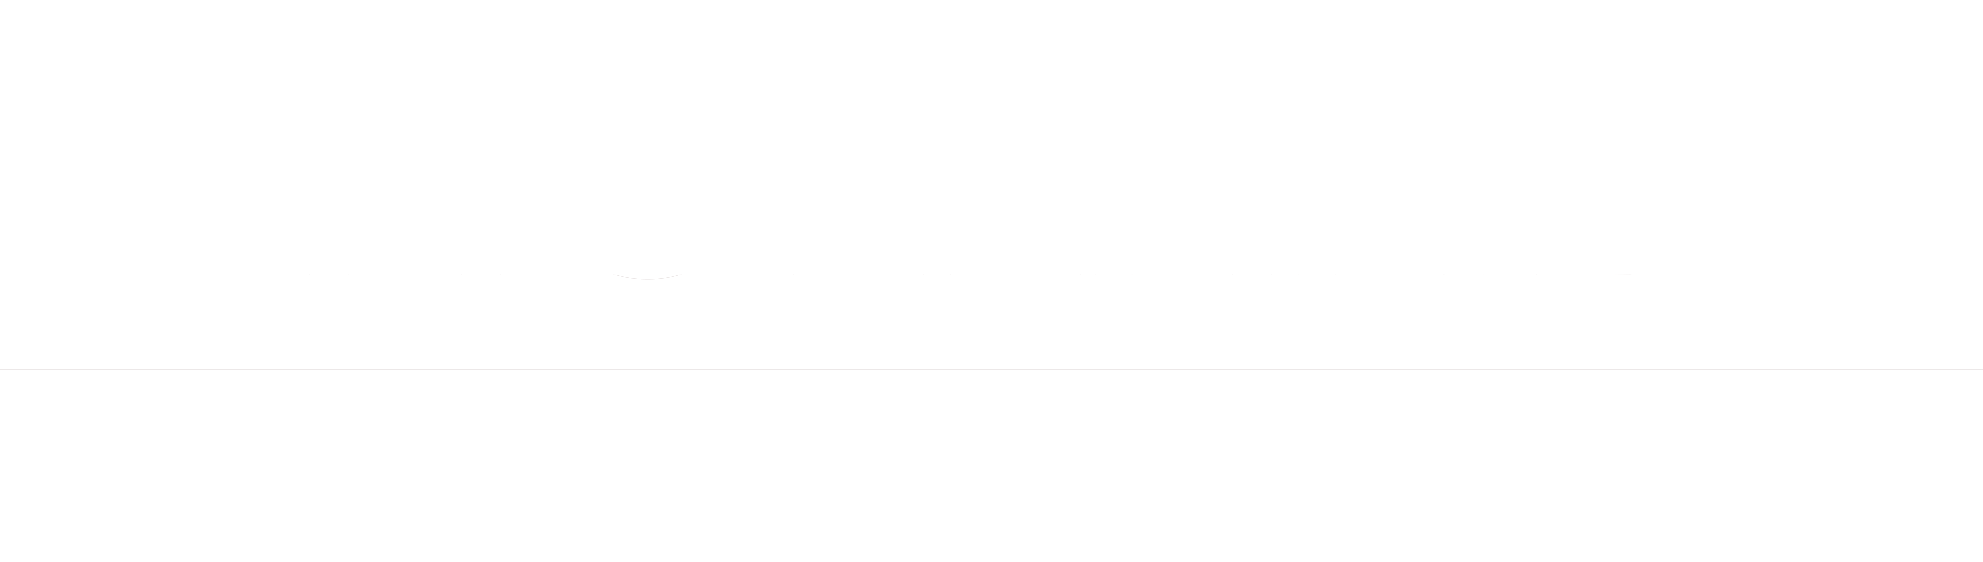 Holland Historisch Tijdschrift